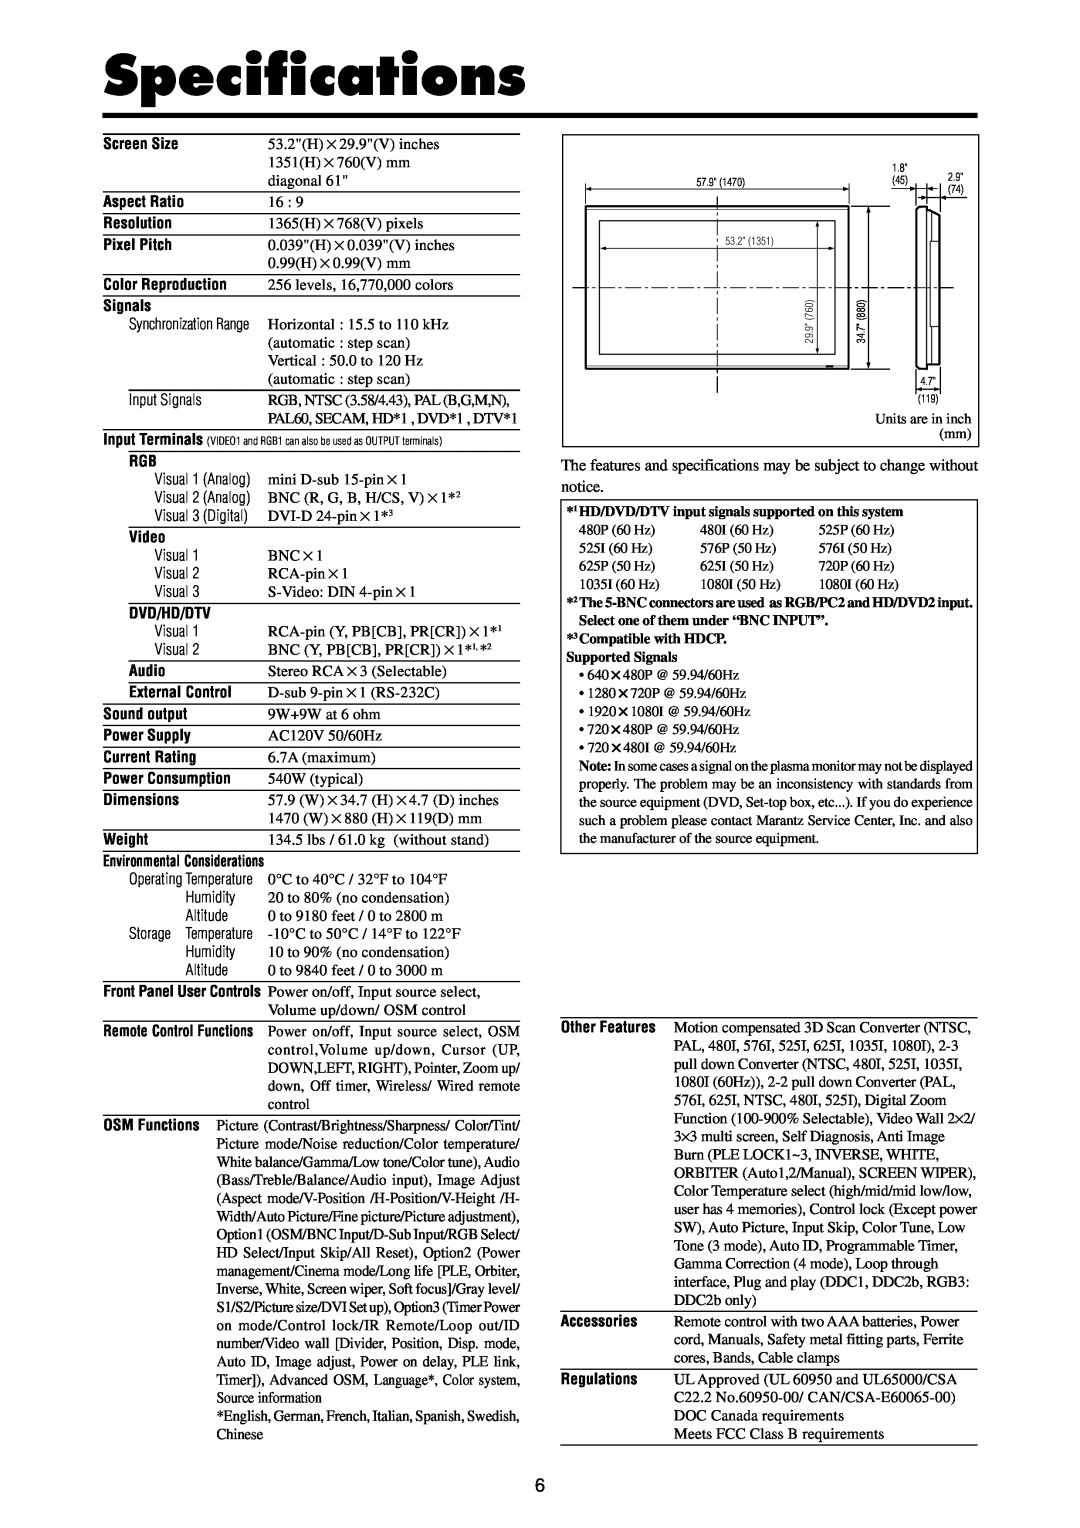 Marantz PD6140D Specifications, Screen Size, Aspect Ratio, Resolution, Pixel Pitch, Color Reproduction, Signals, Video 